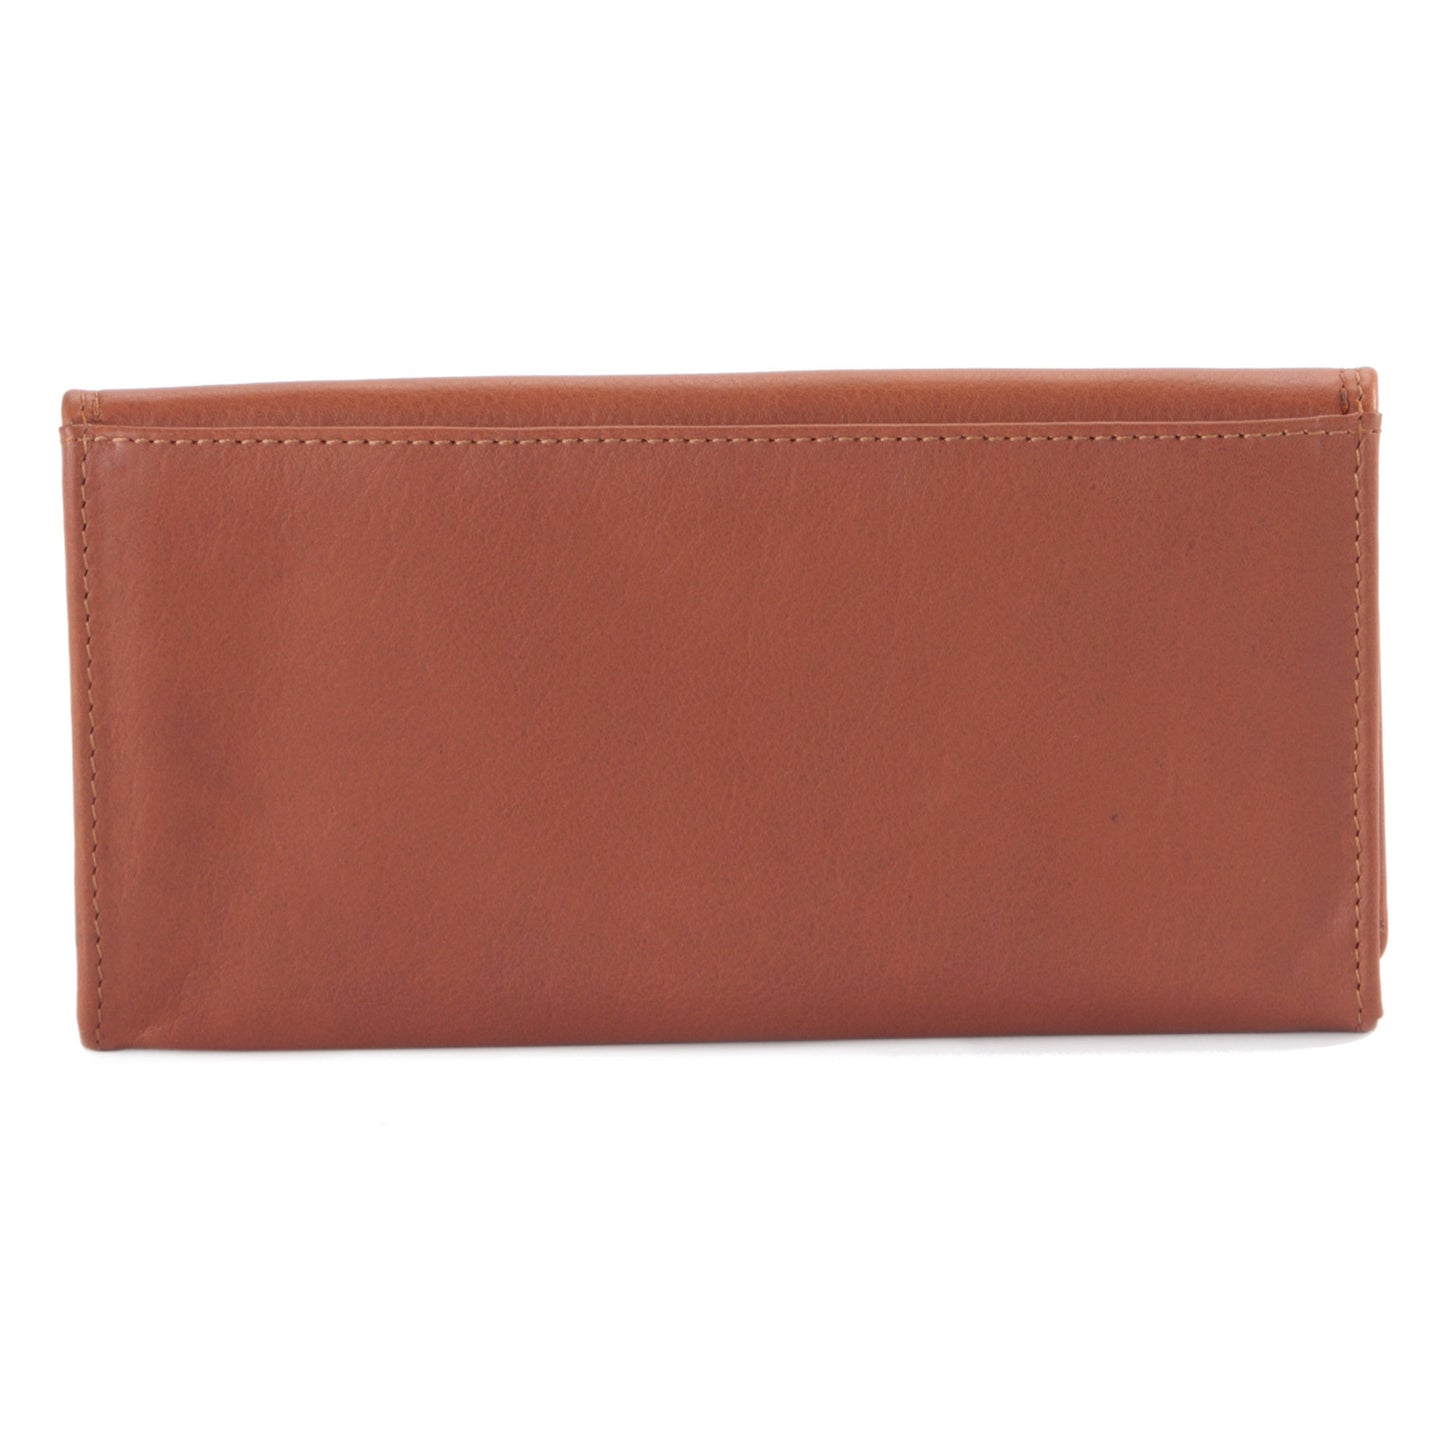 Ladies Leather Clutch Wallet in Tan | Style n Craft | #300965-CG